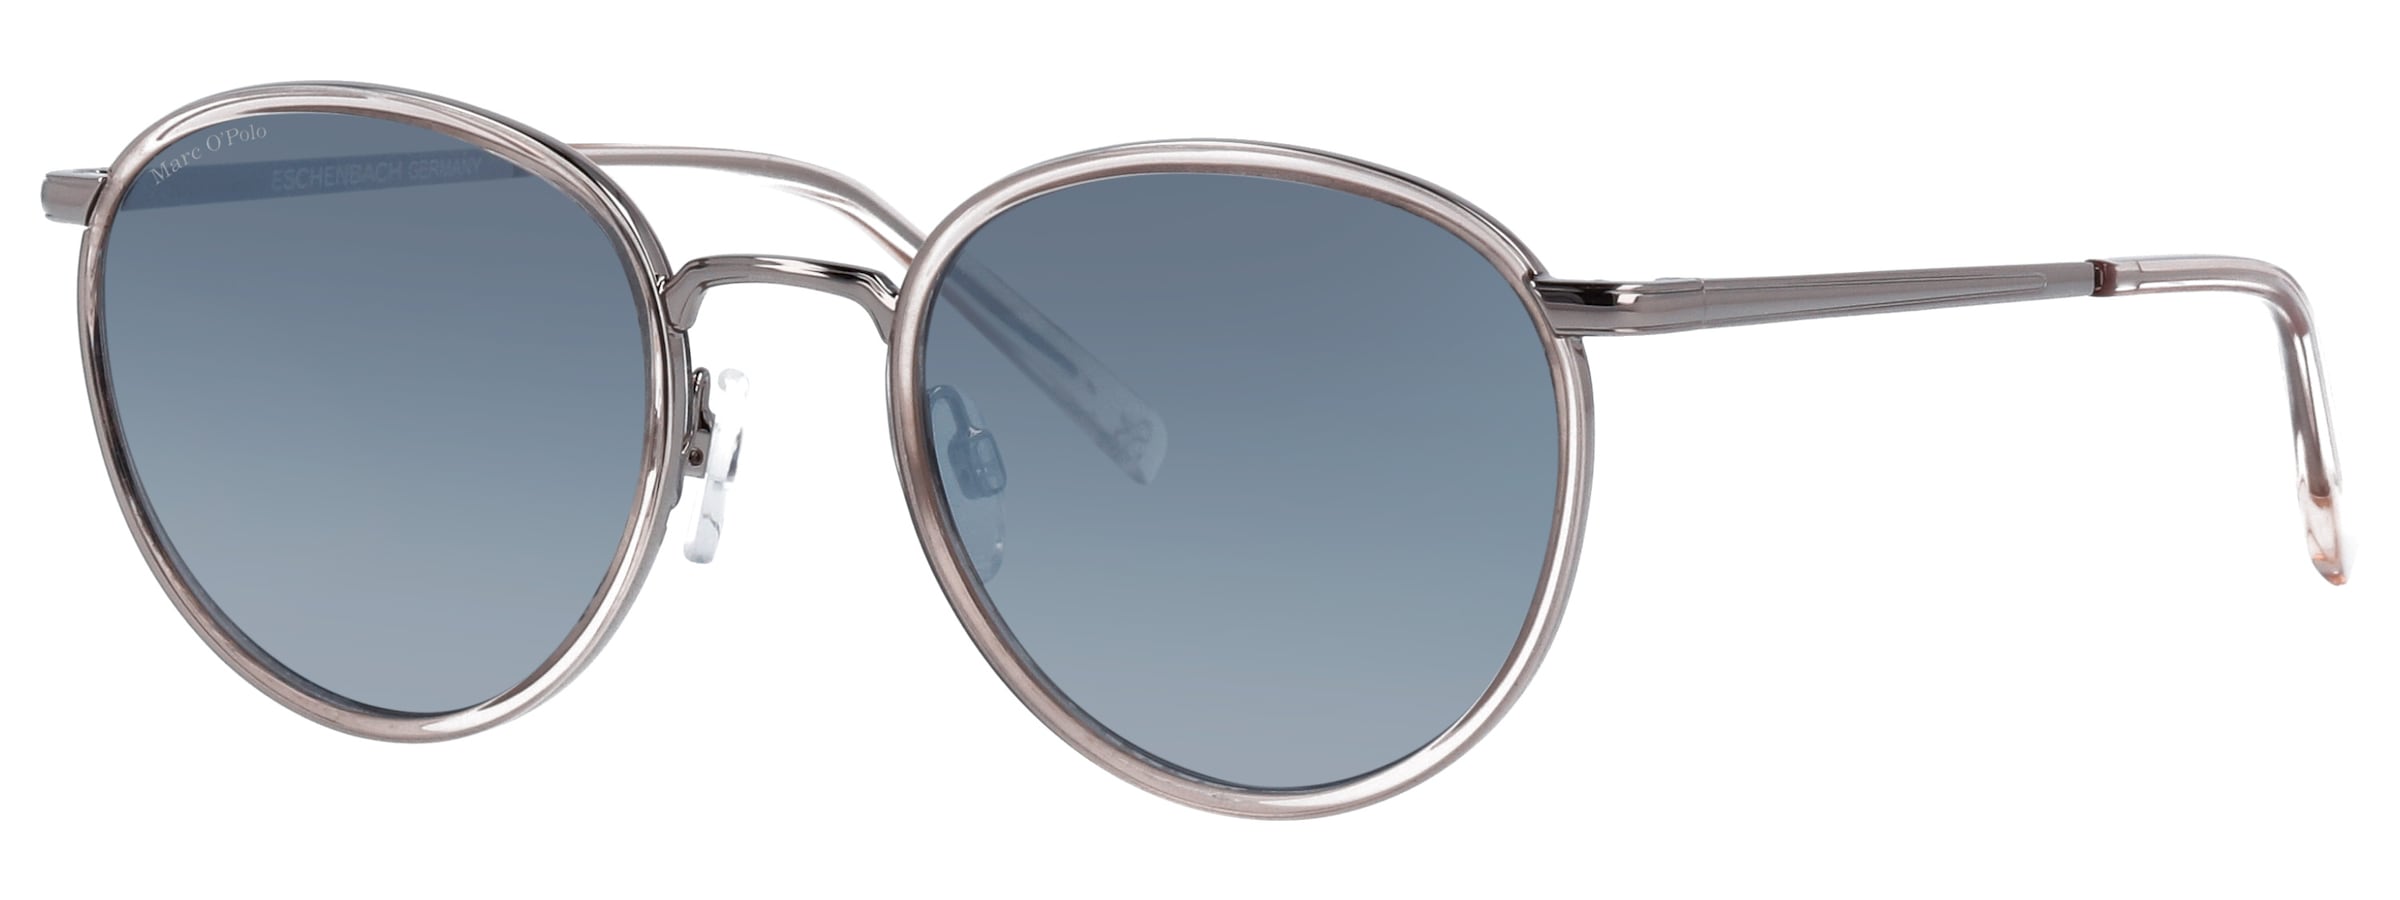 Marc O'Polo Sonnenbrille »Modell 505105«, Panto-Form